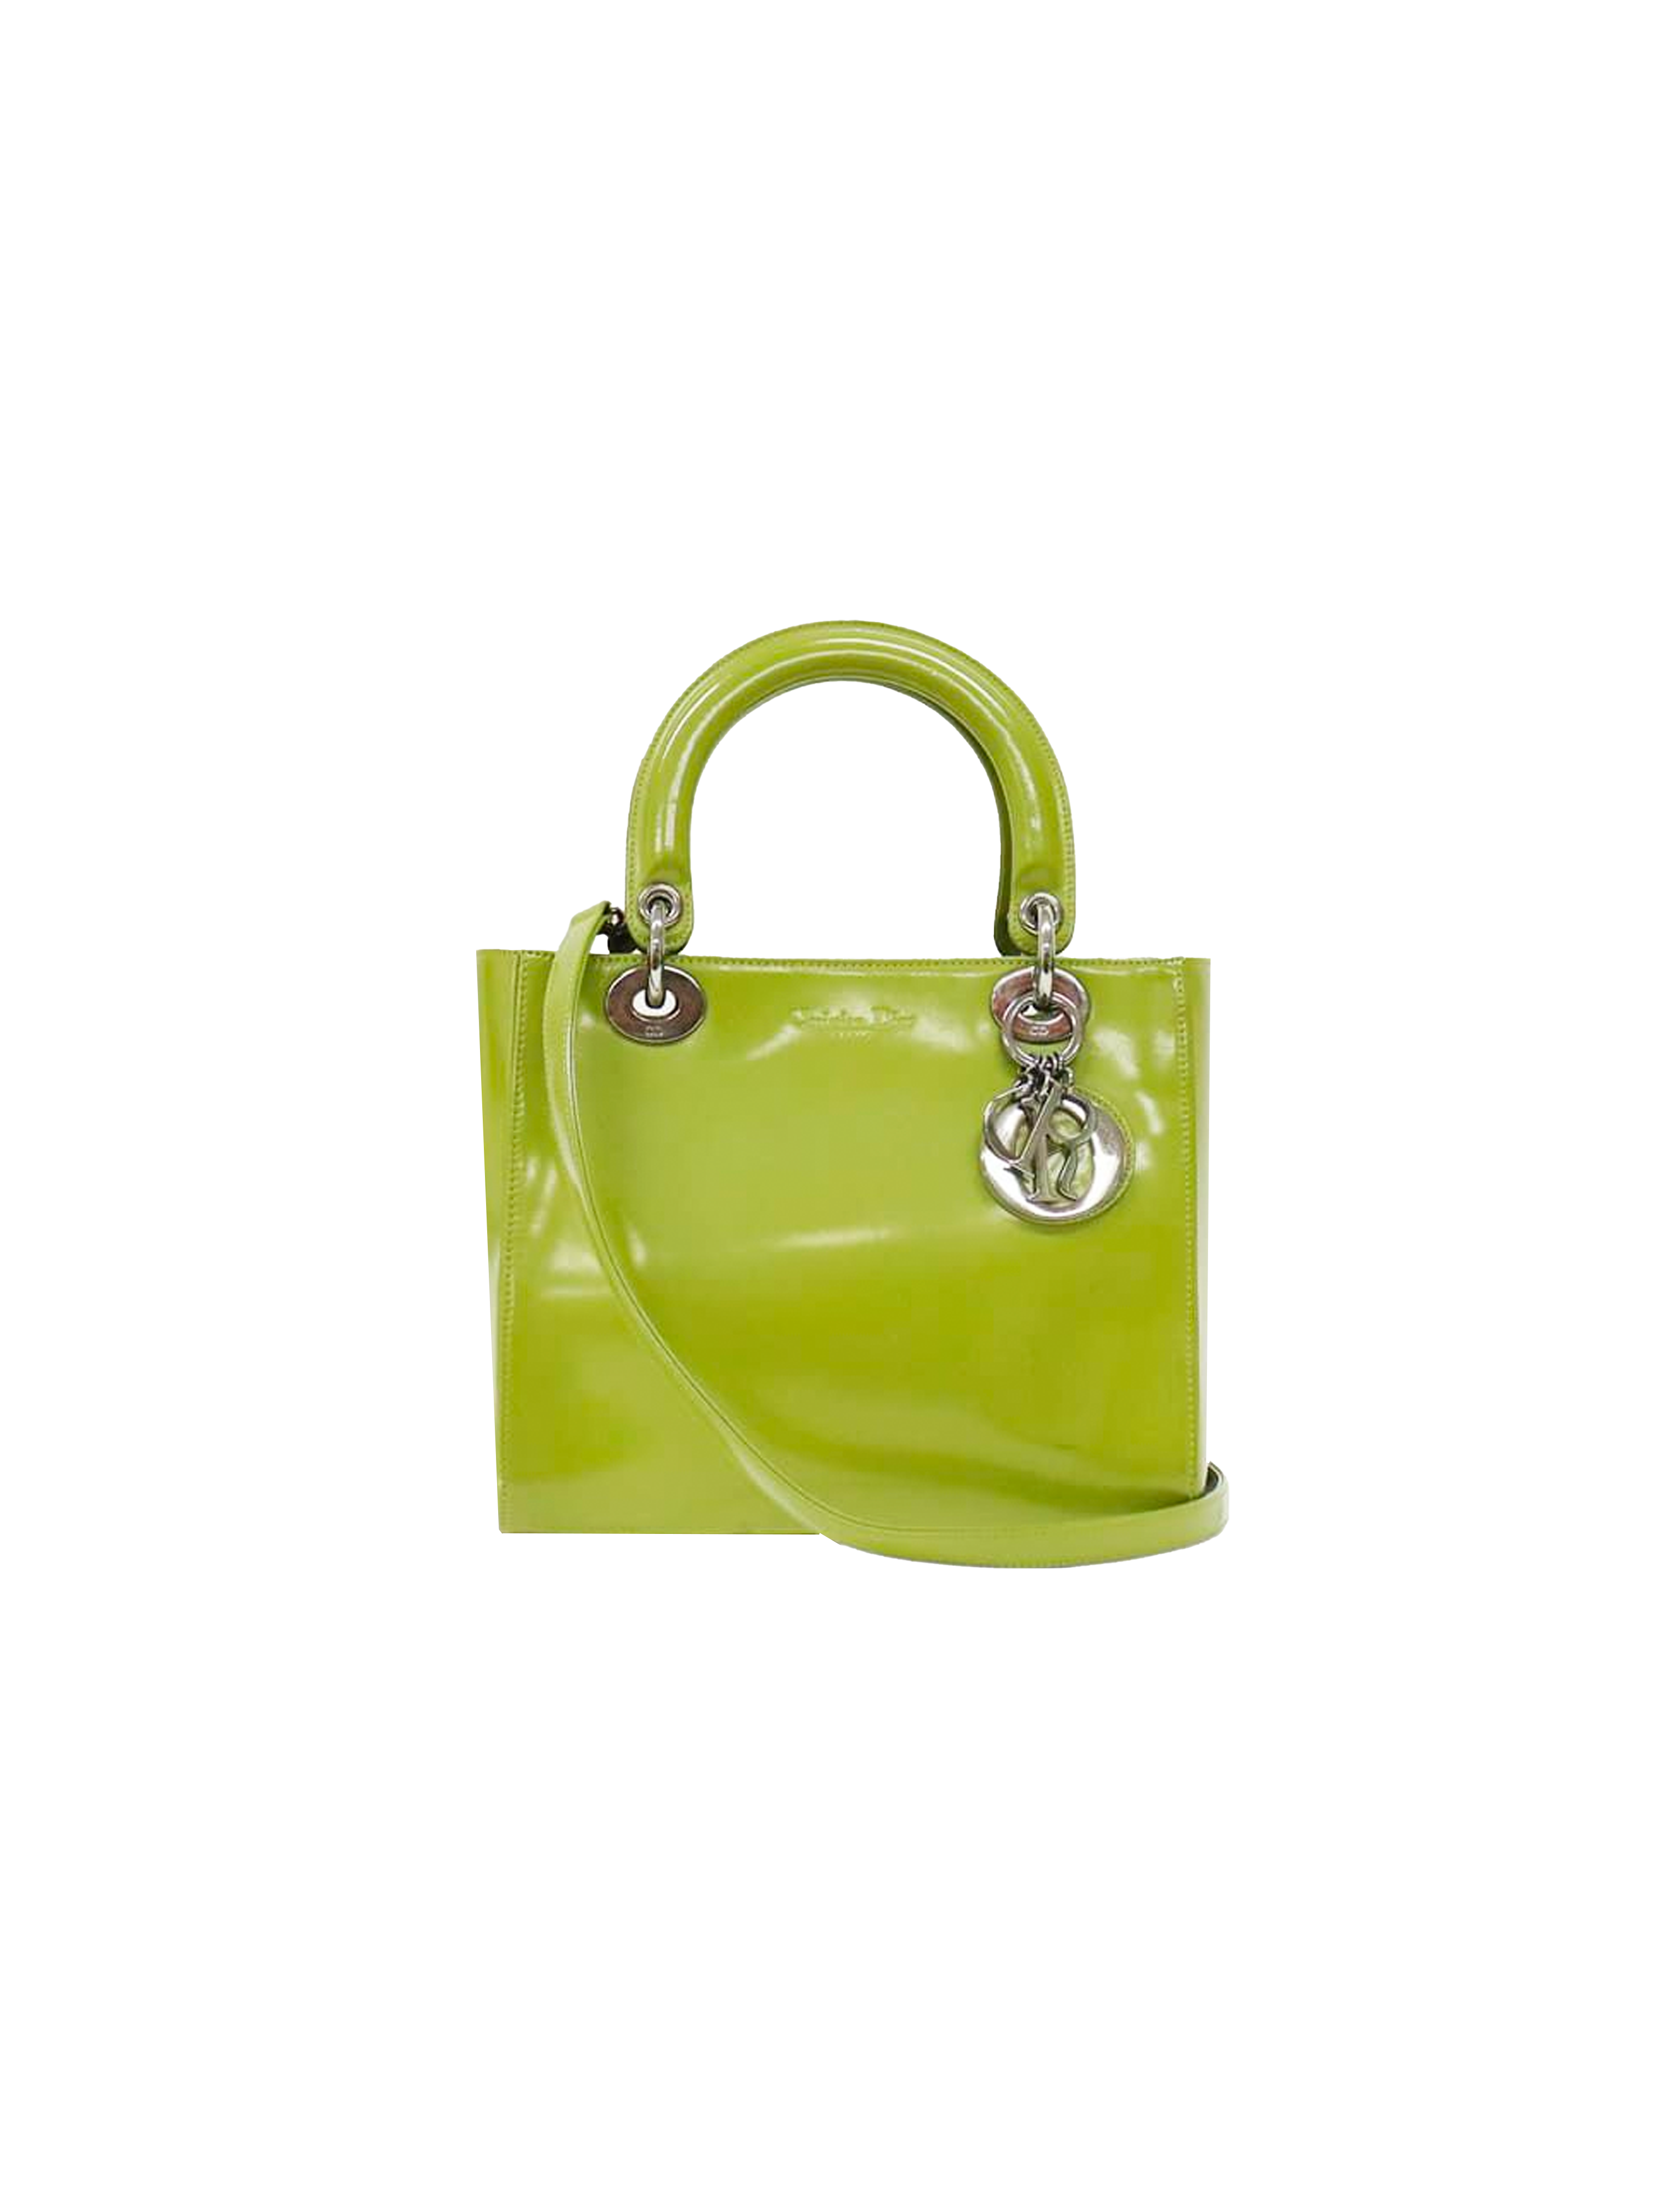 Christian Dior 2000s Lime Green Lady Dior Bag